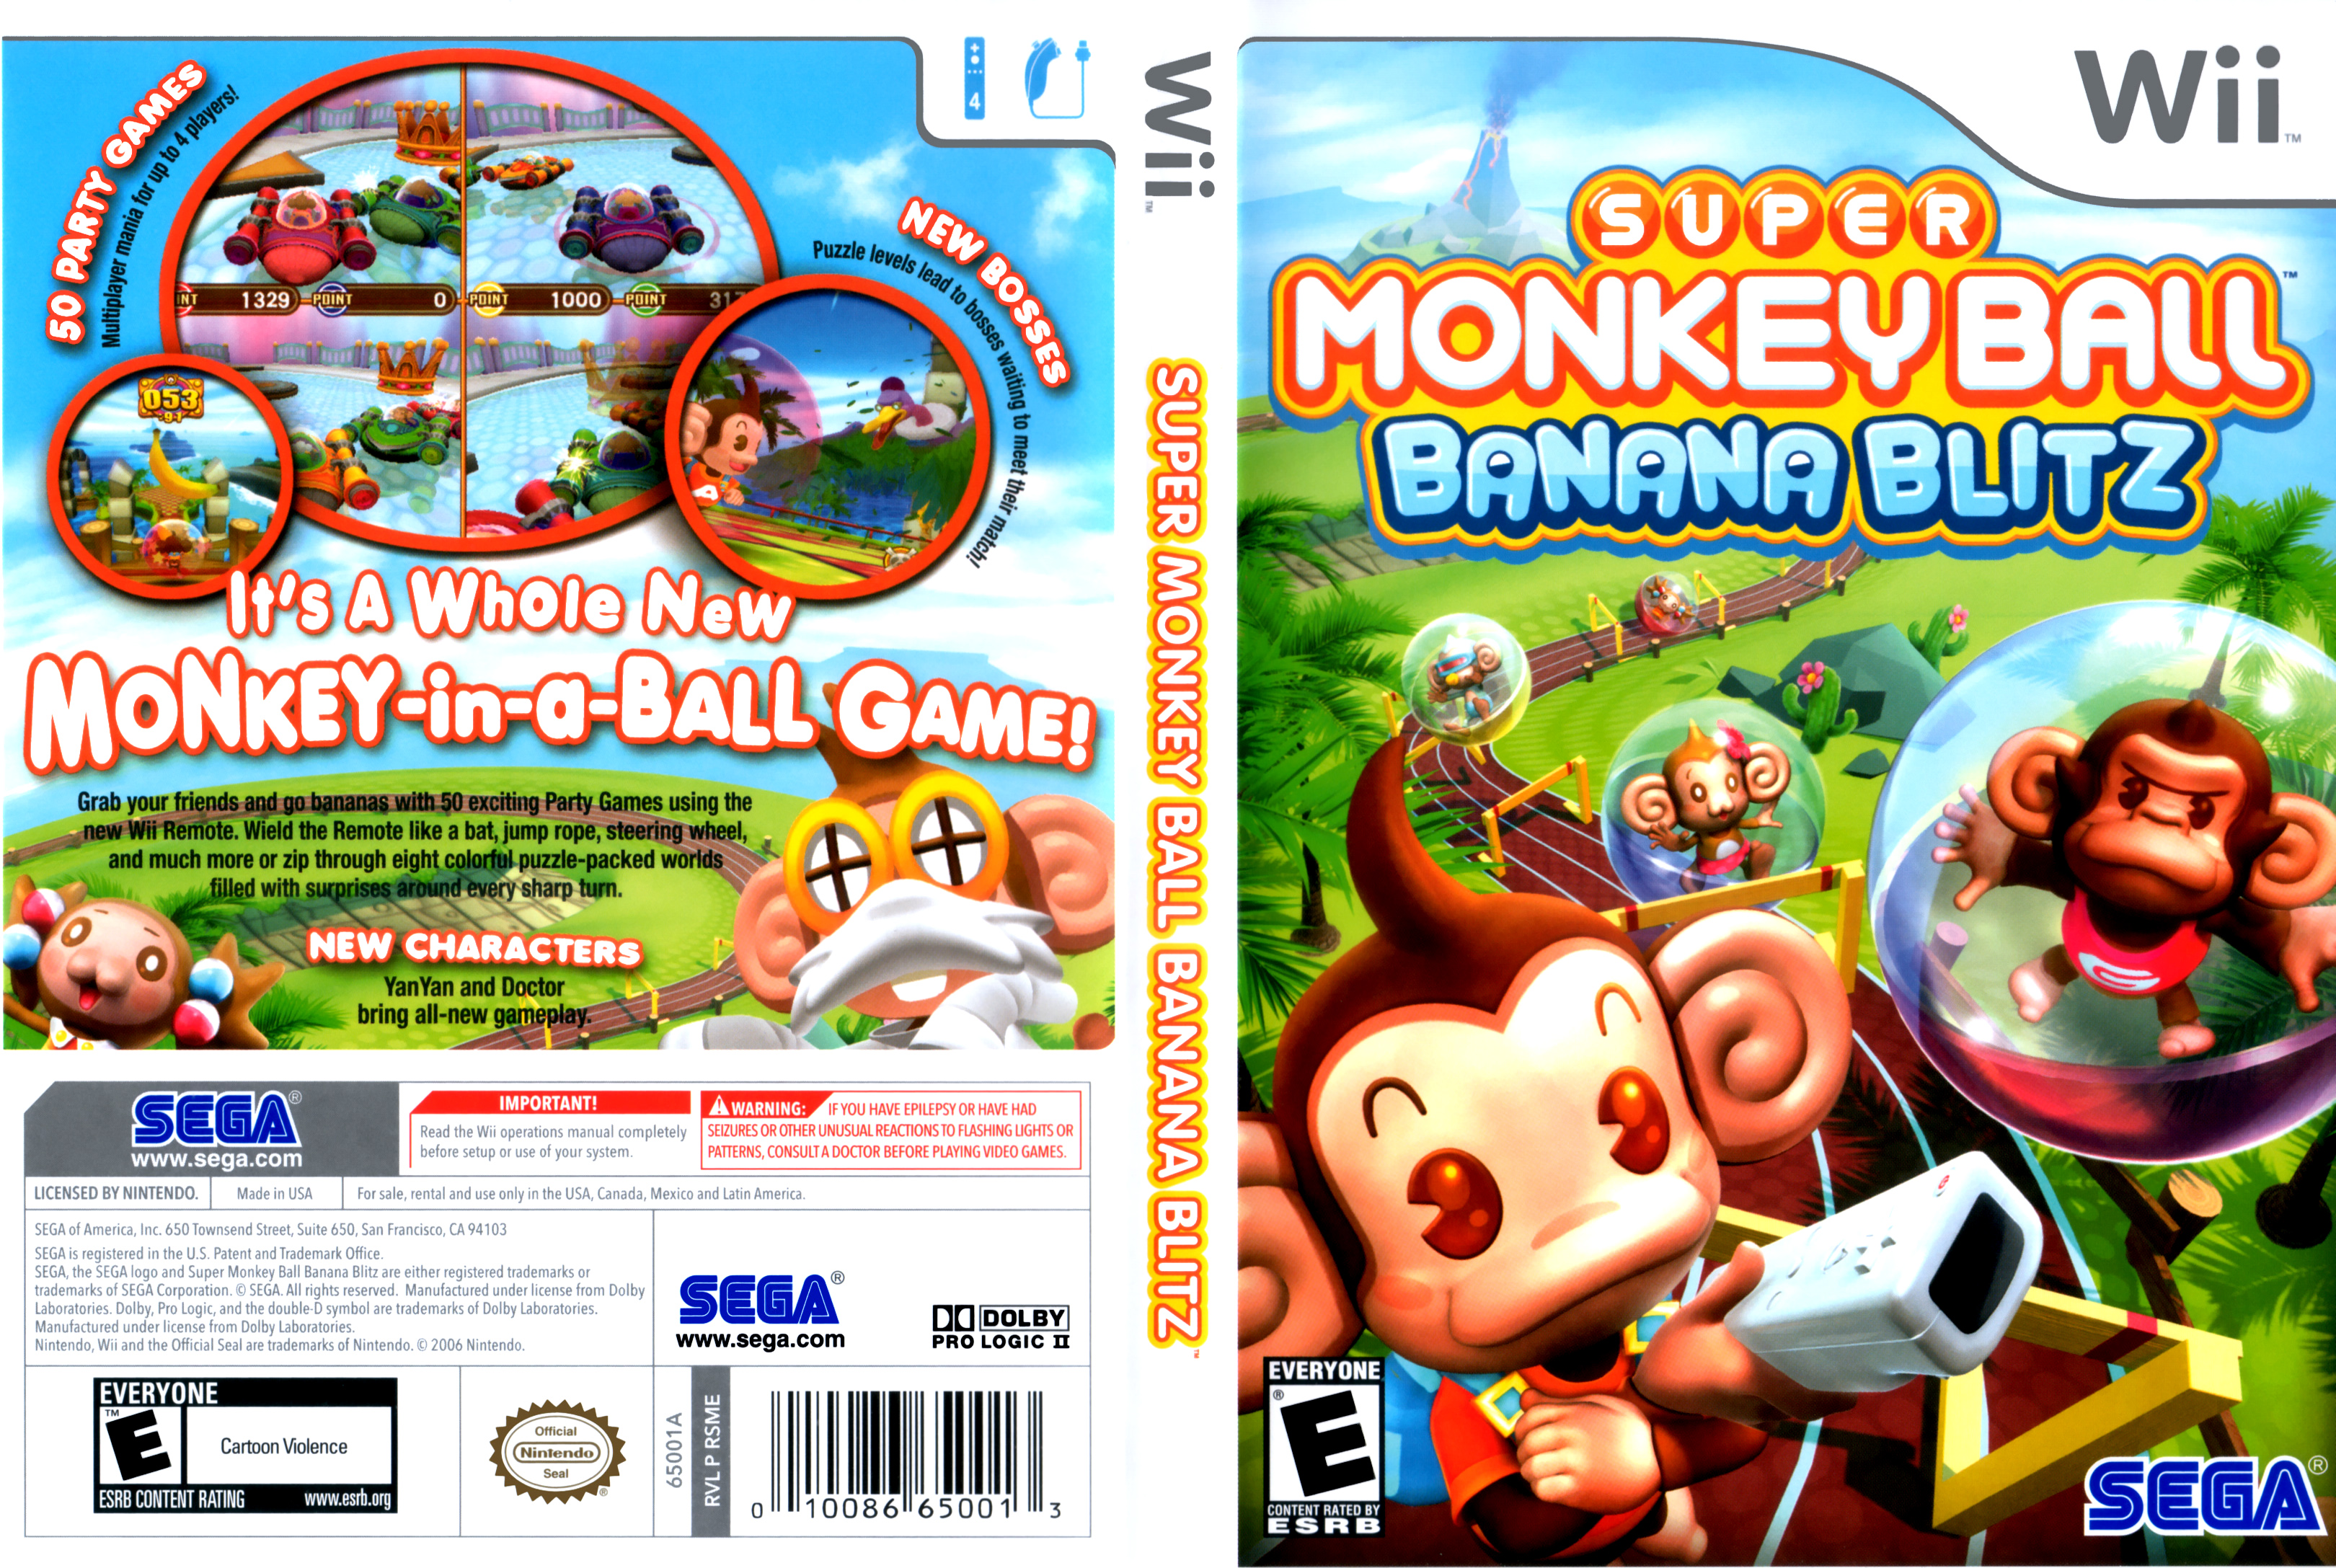 Super monkey ball banana. Super macloid Ball Banana Blitz. Wii Ball. Wii super Monkey Ball: Step & Roll.